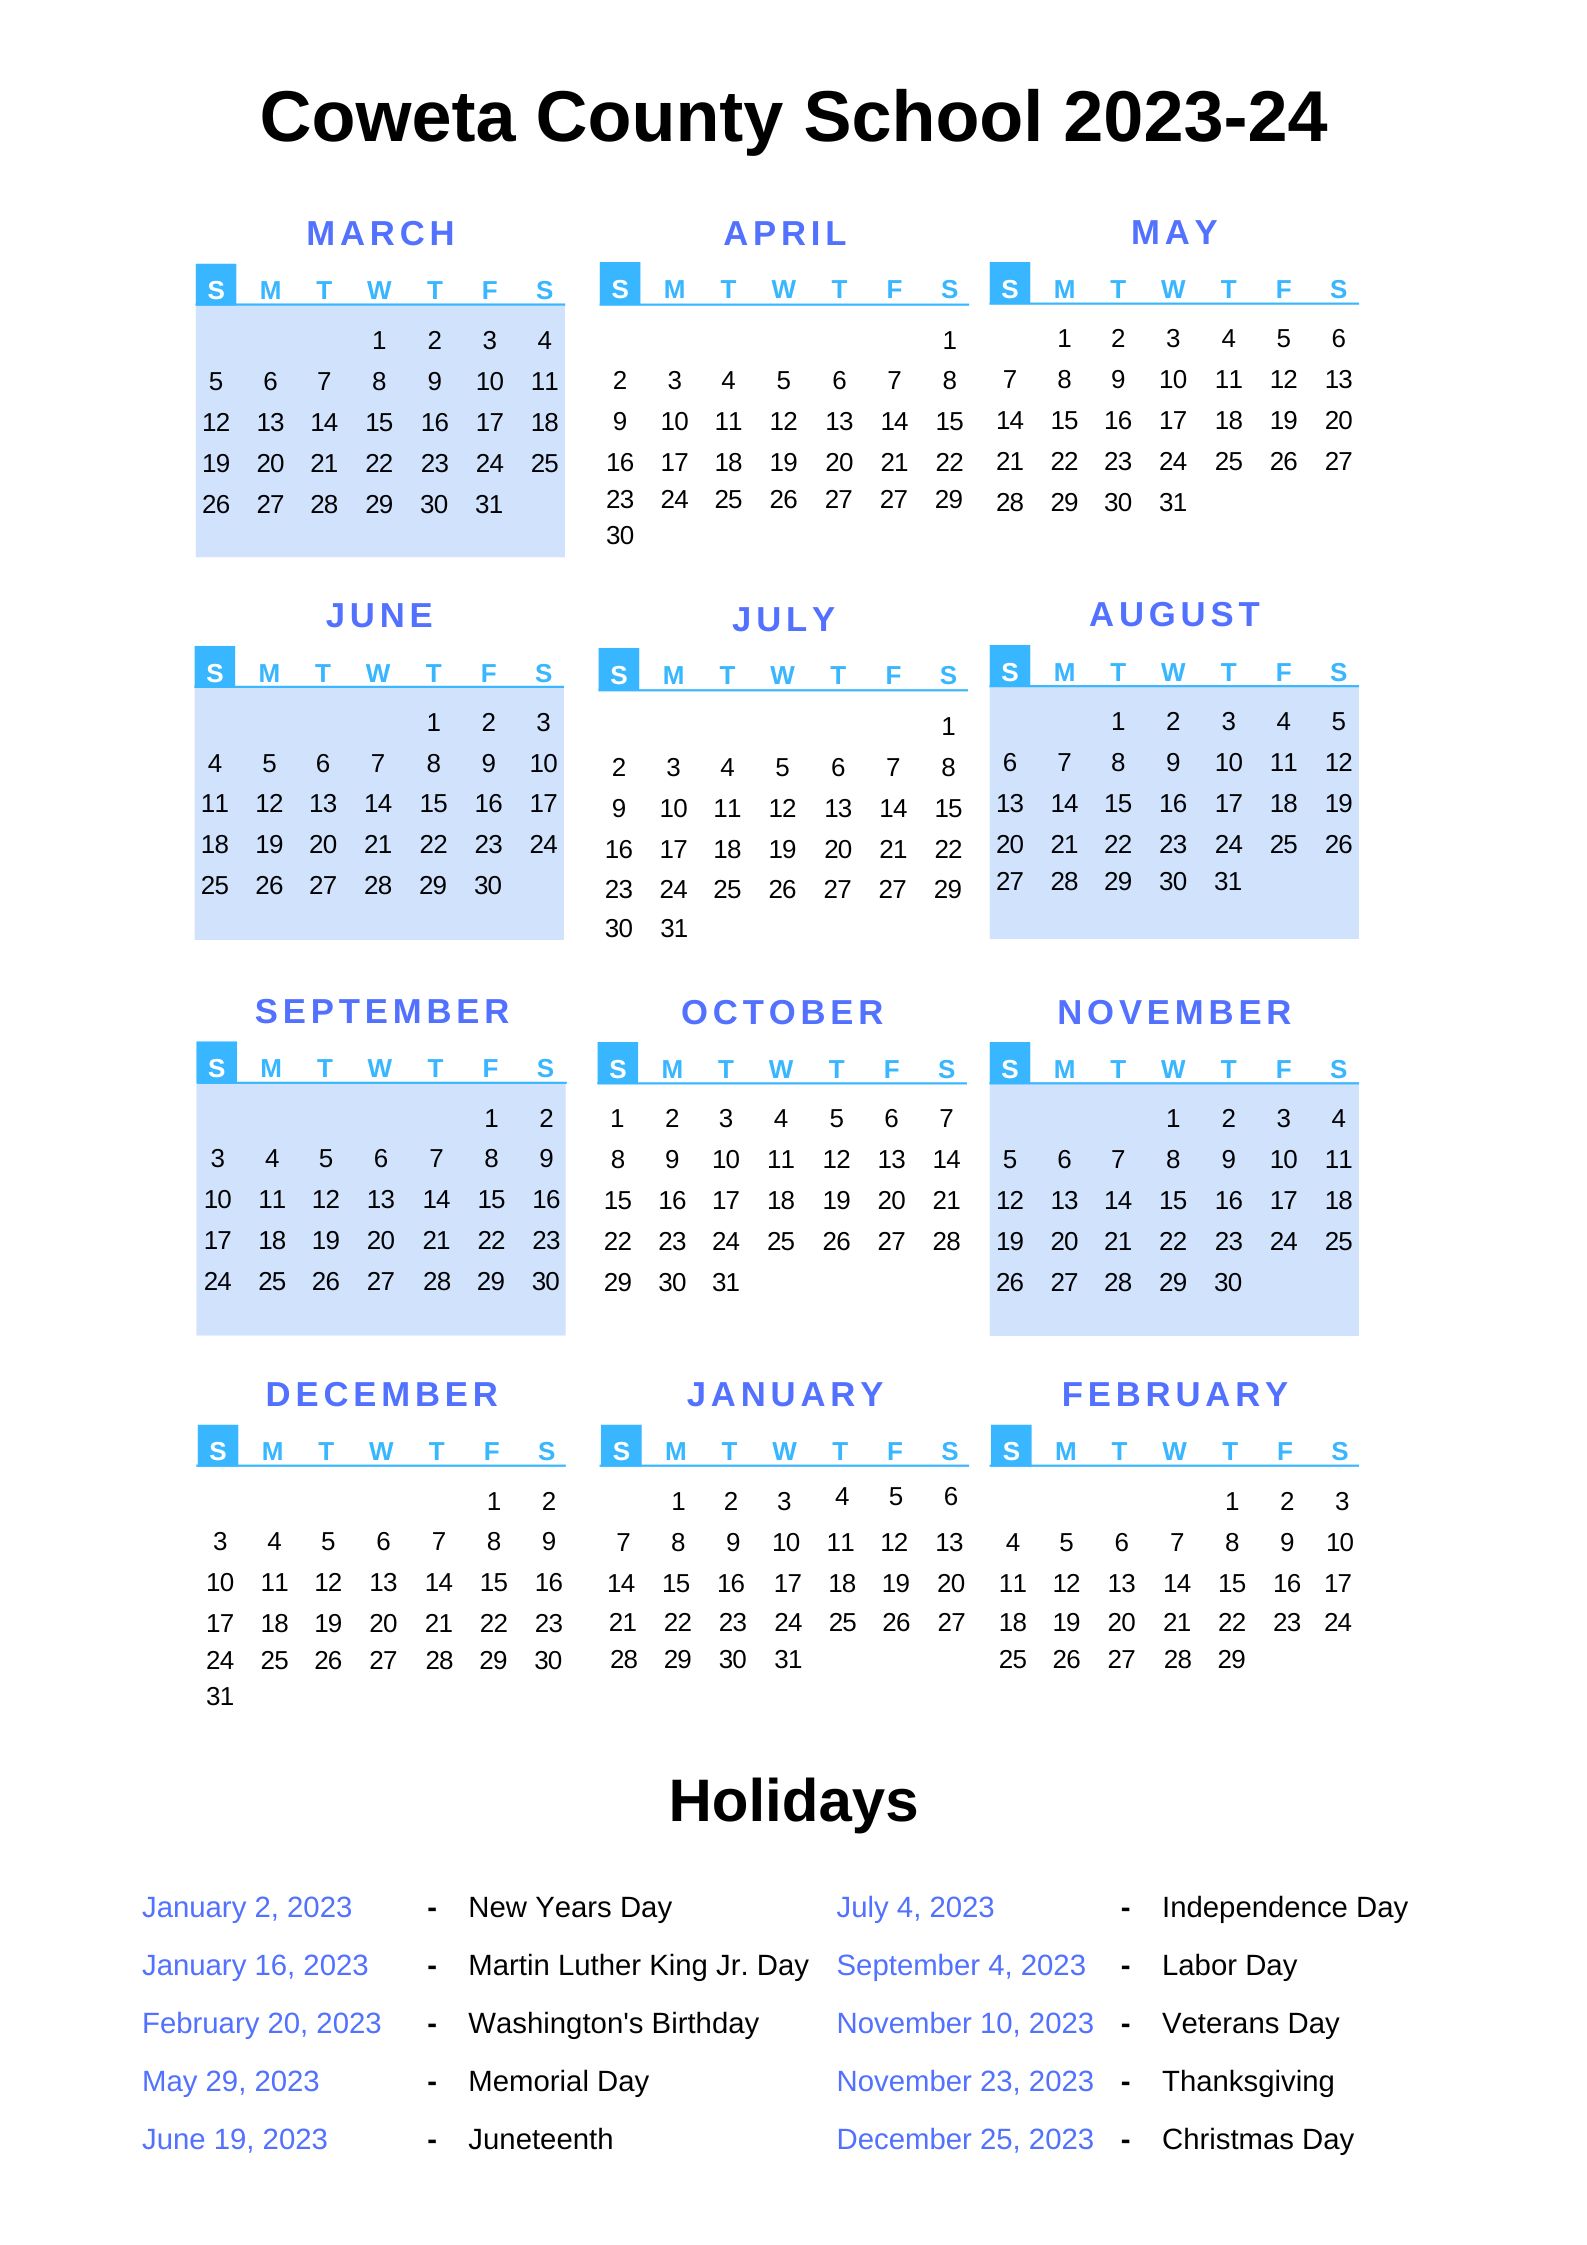 Coweta County Schools Calendar 202324 With Holidays